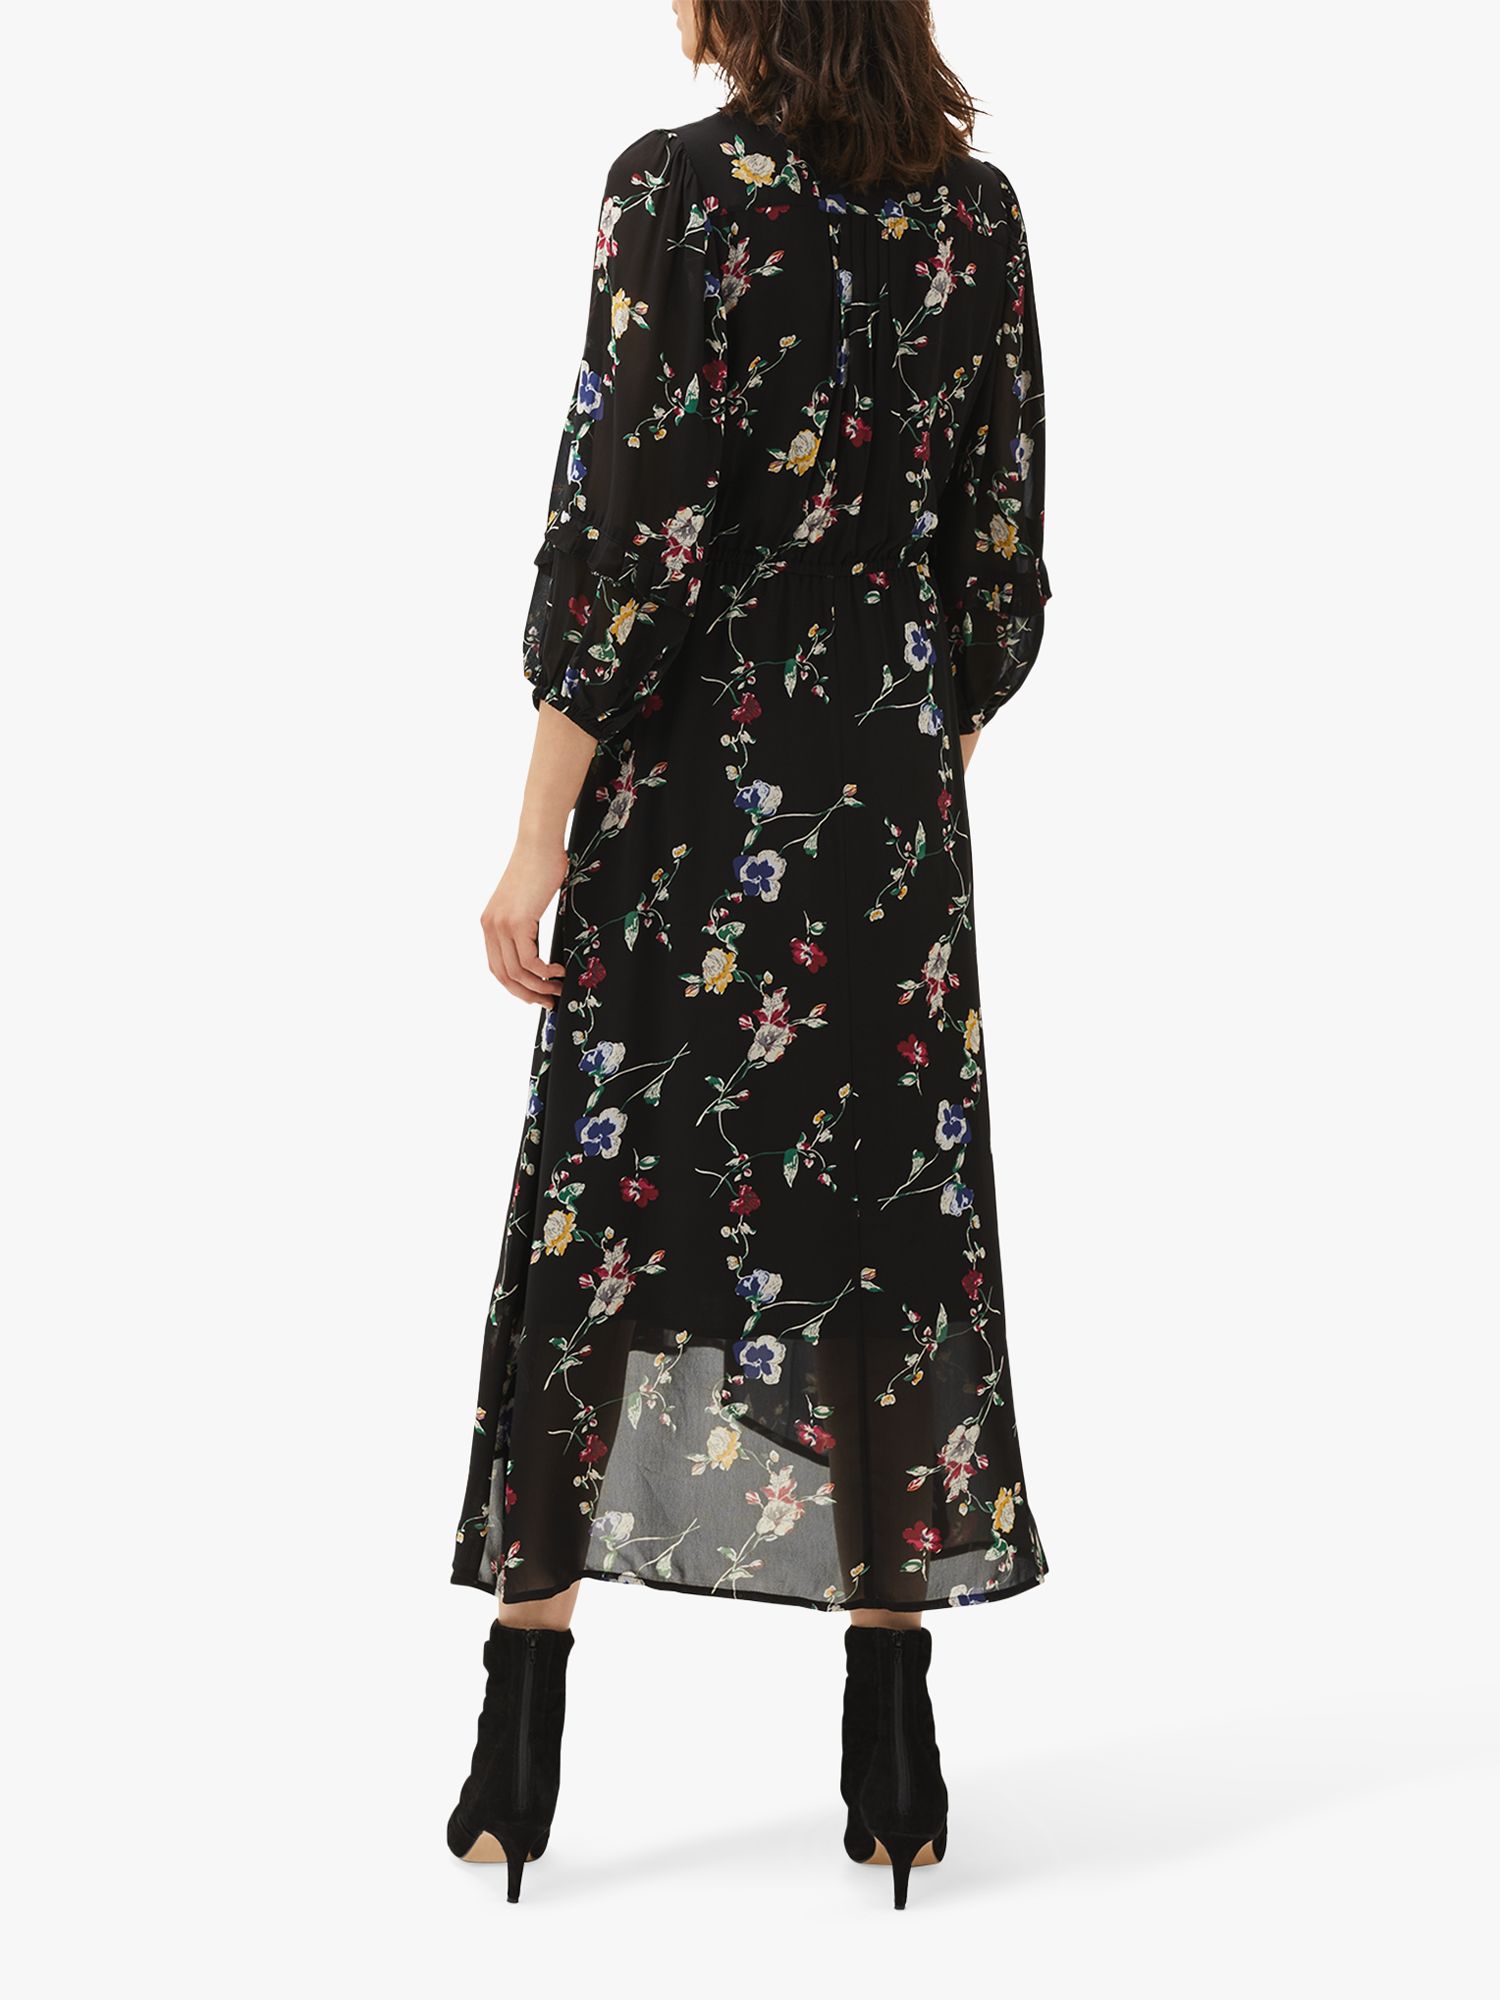 Phase Eight Imara Floral Print Midi Dress, Black/Multi